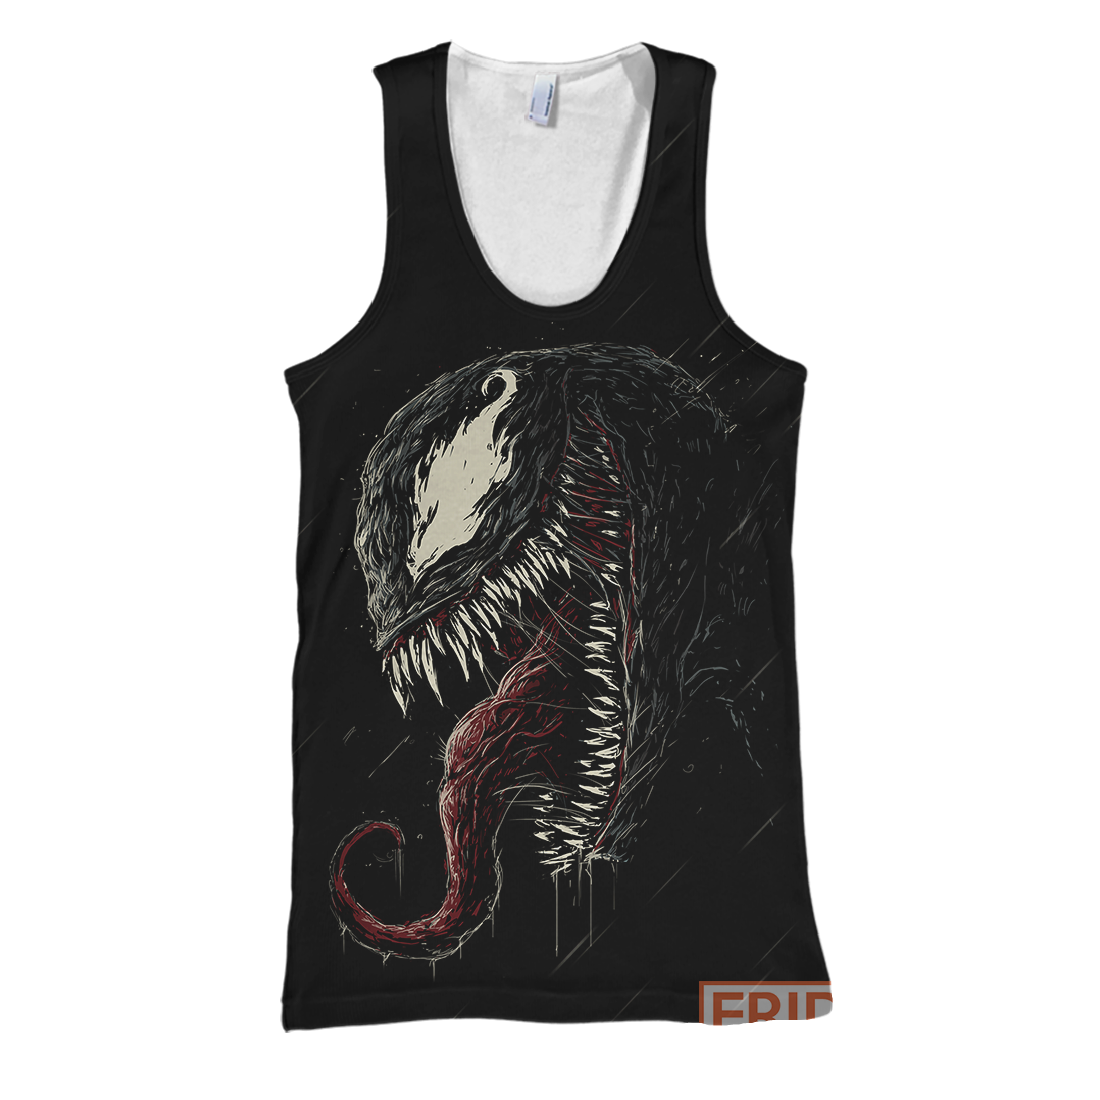 Unifinz Venom MV T-shirt Venom Shirt - Black T-shirt Venom MV Hoodie Sweater Tank 2026